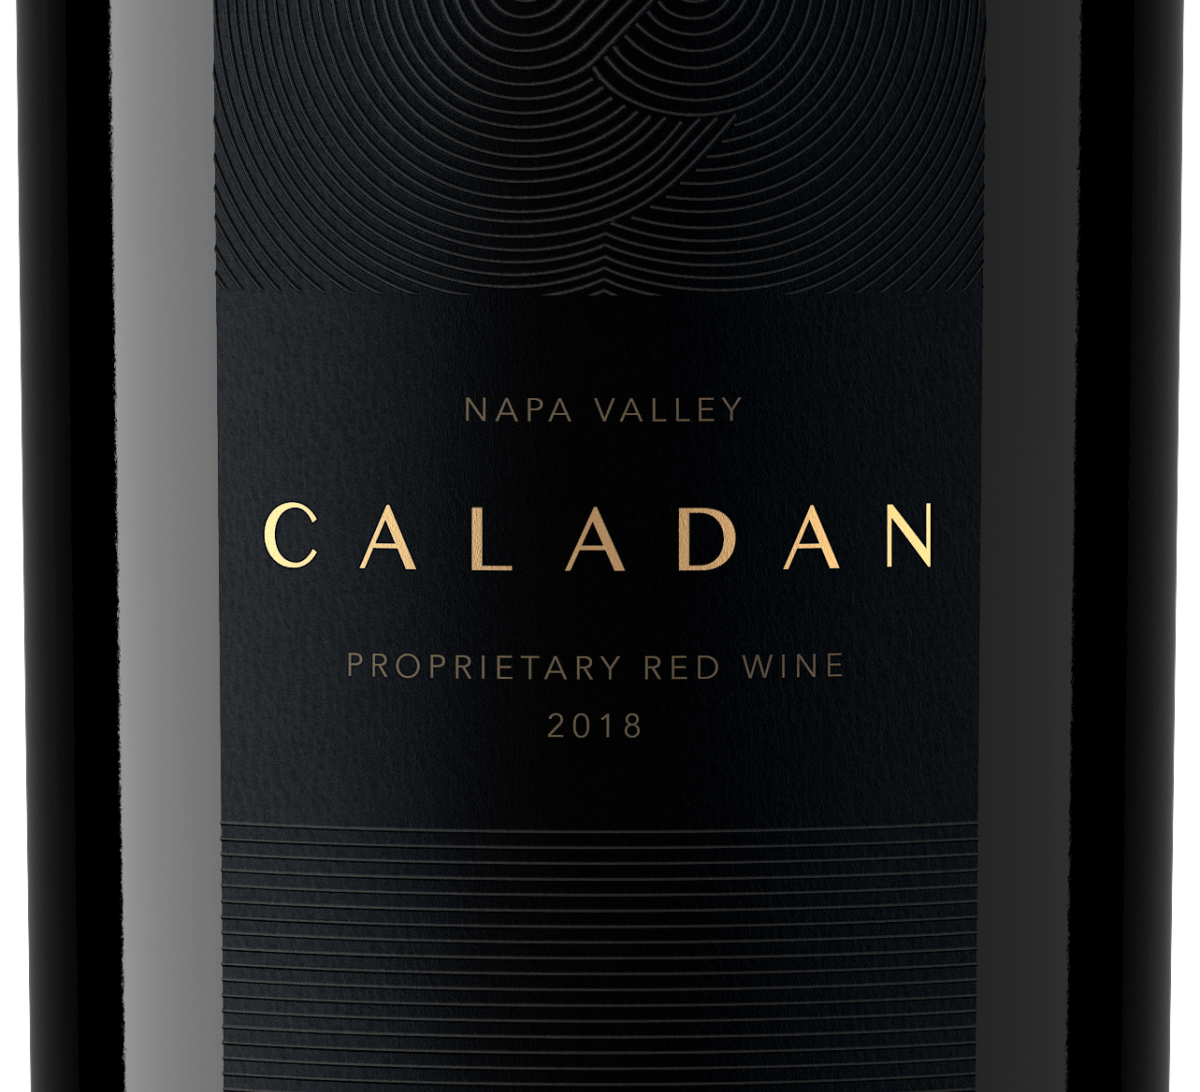 2018 Caladan Proprietary Red wine bottle